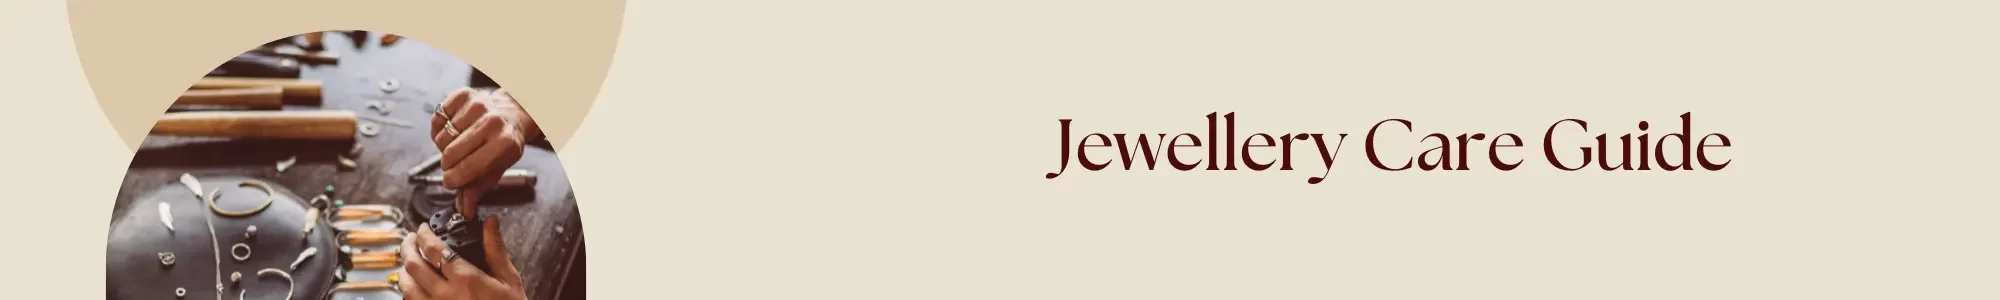 jewellery care guide